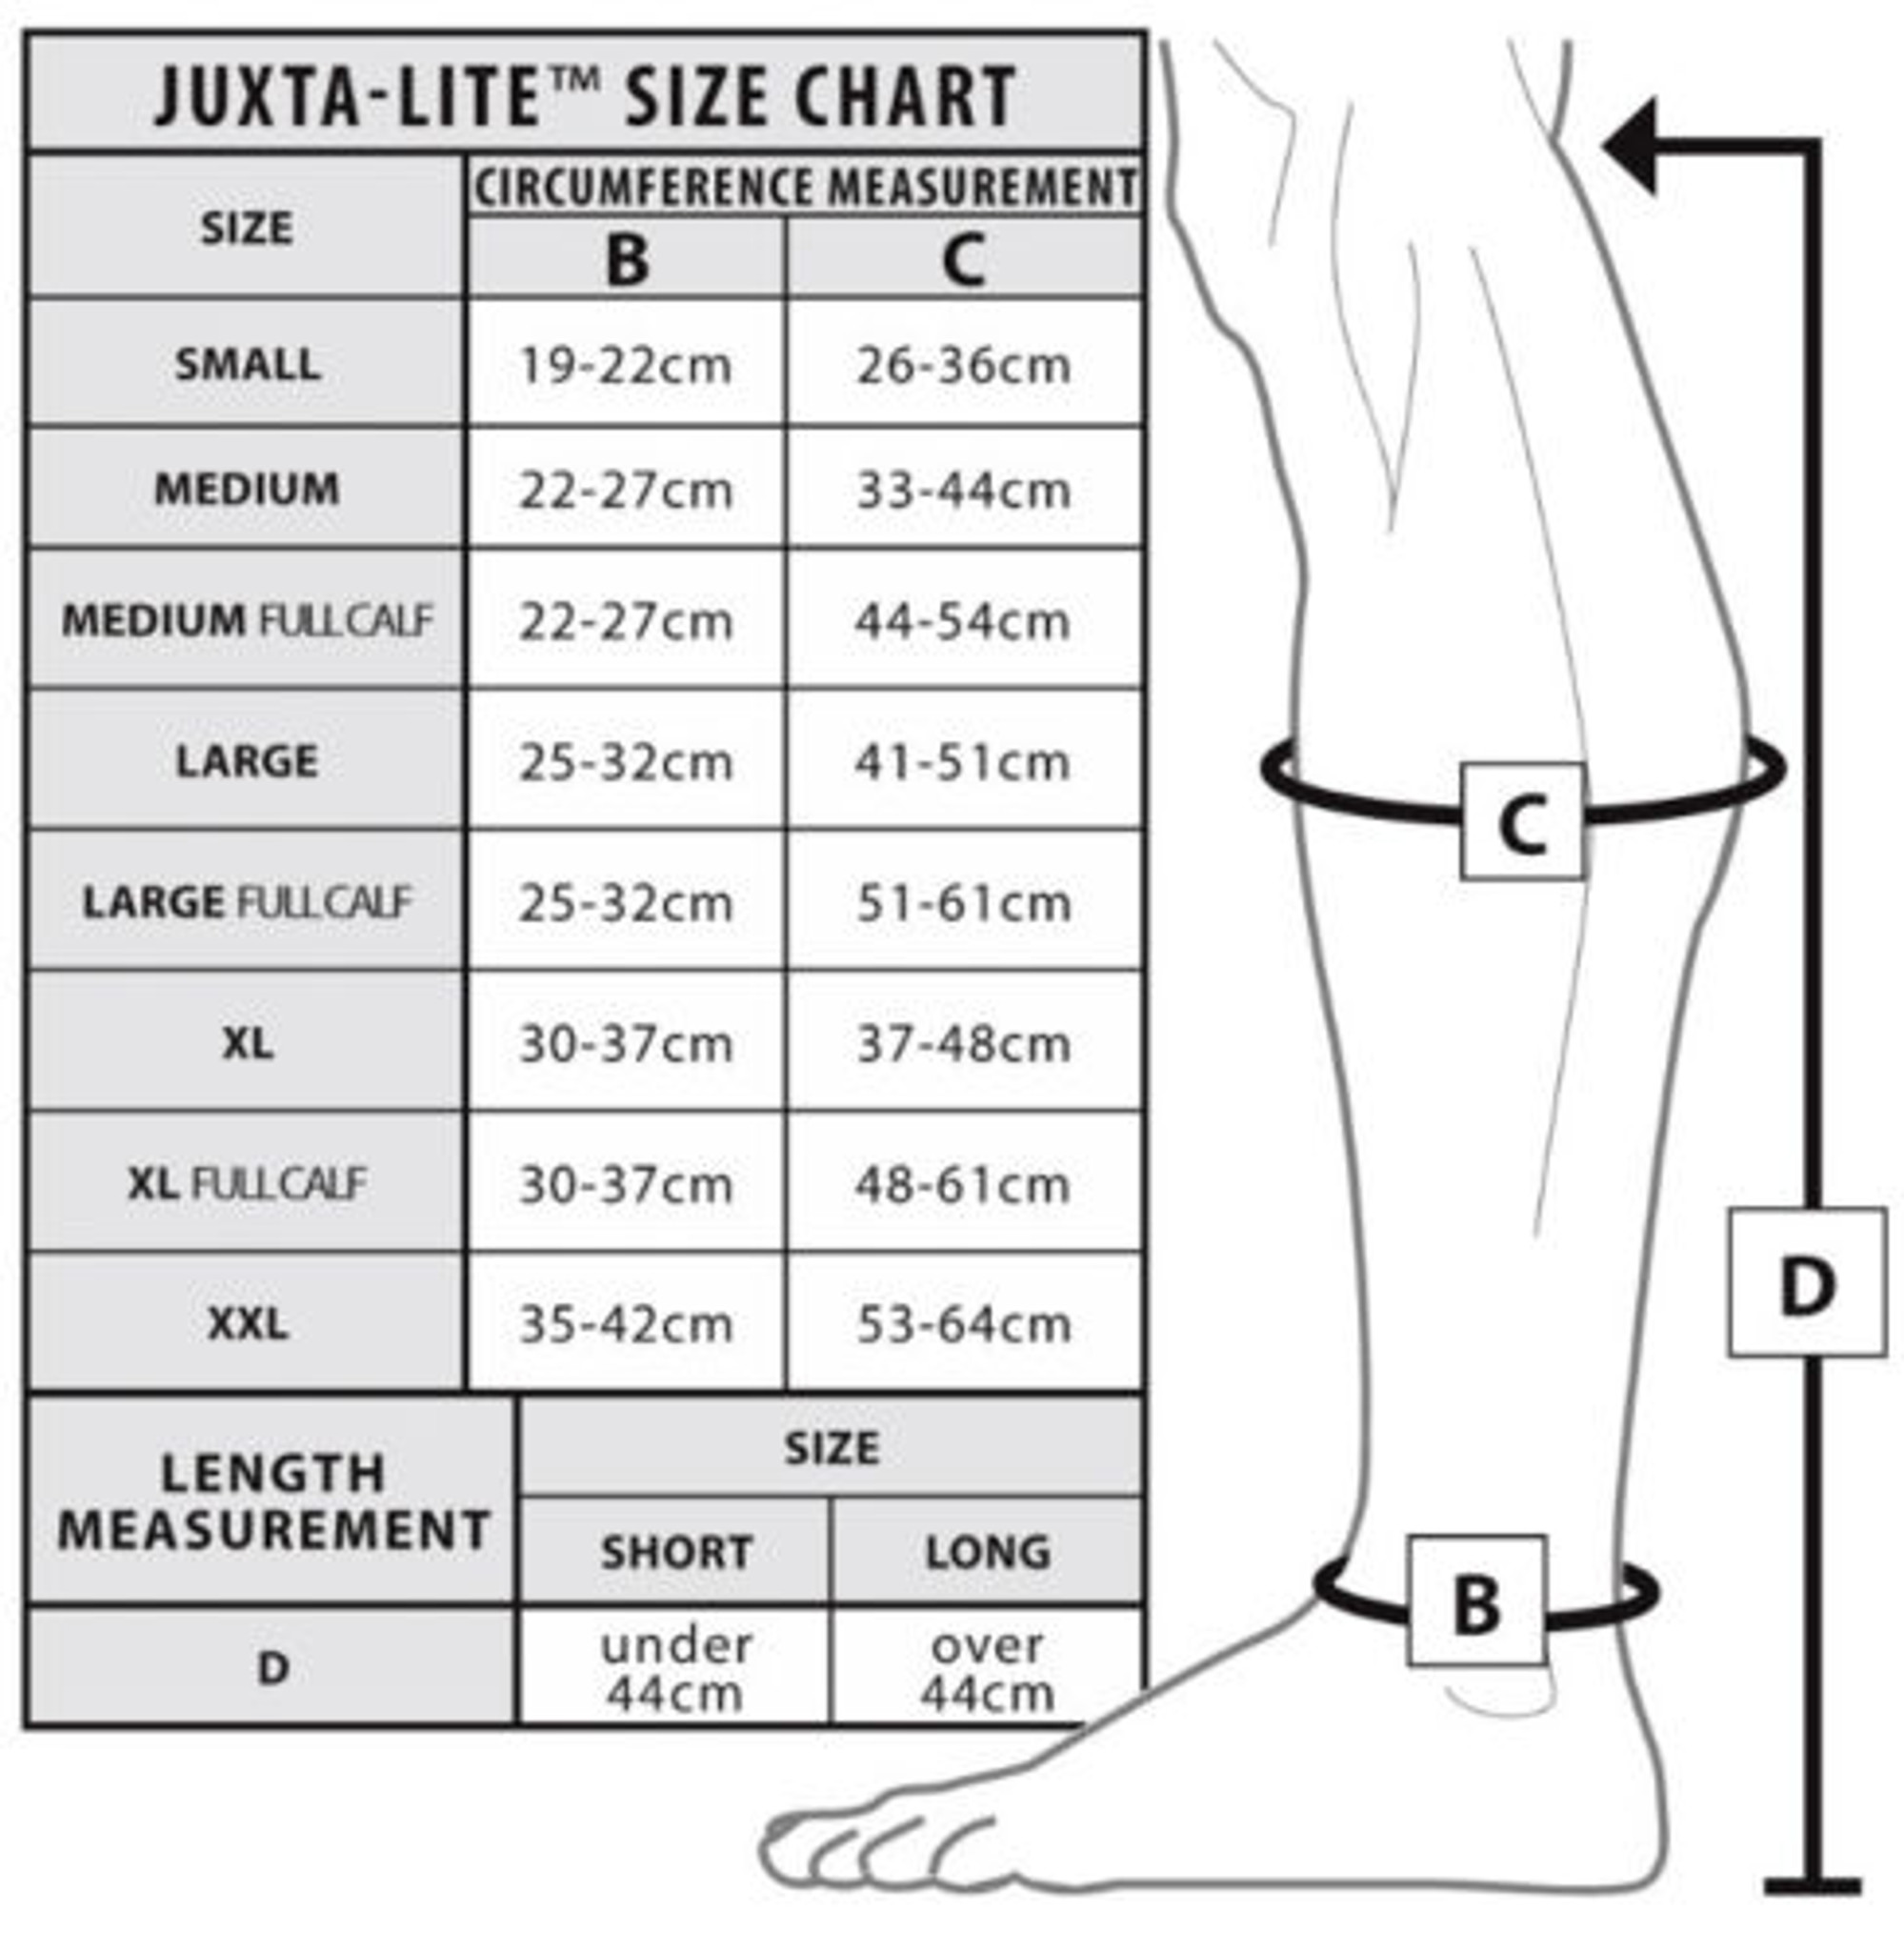 Circaid Juxtalite Size Chart